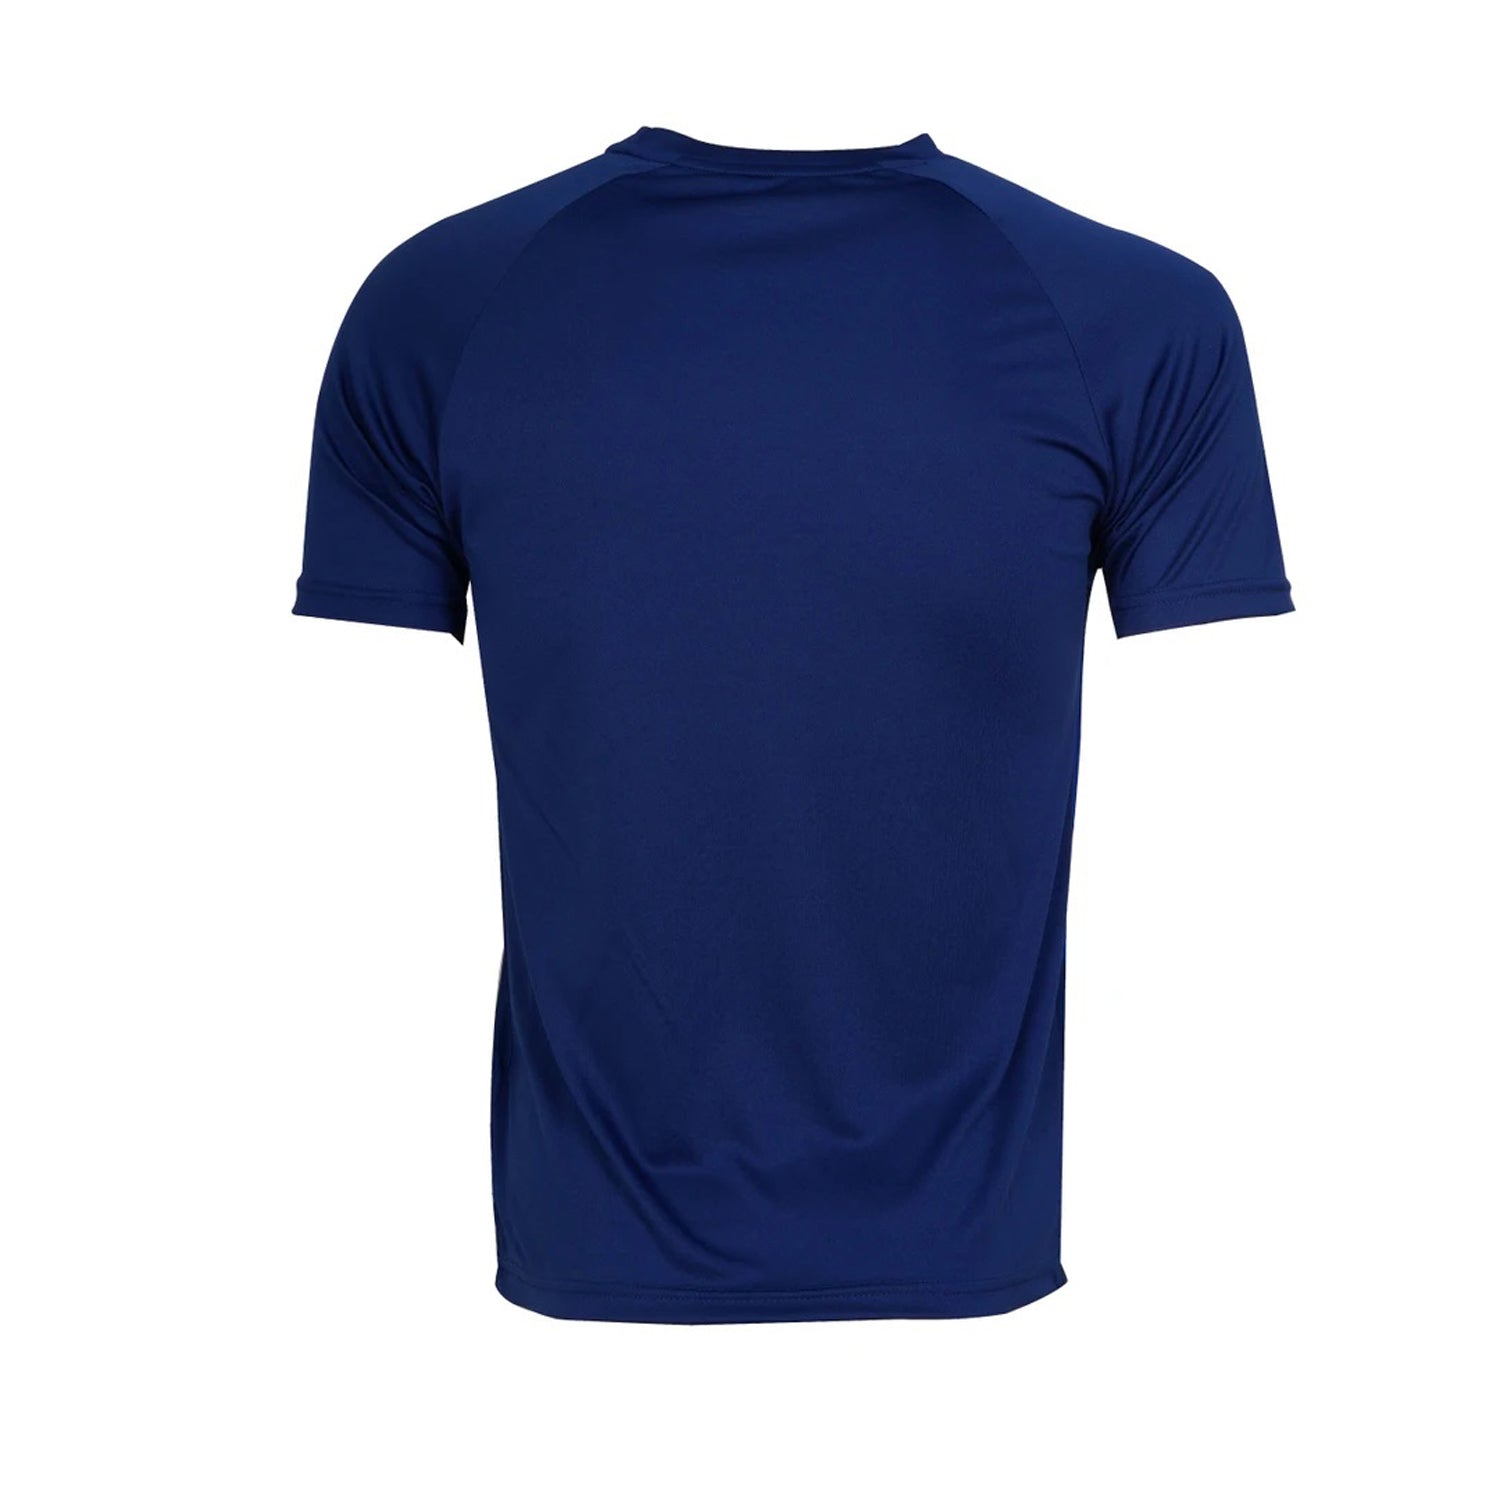 Li-Ning ATSR685 Round Neck Badminton Tshirt, Navy - Best Price online Prokicksports.com